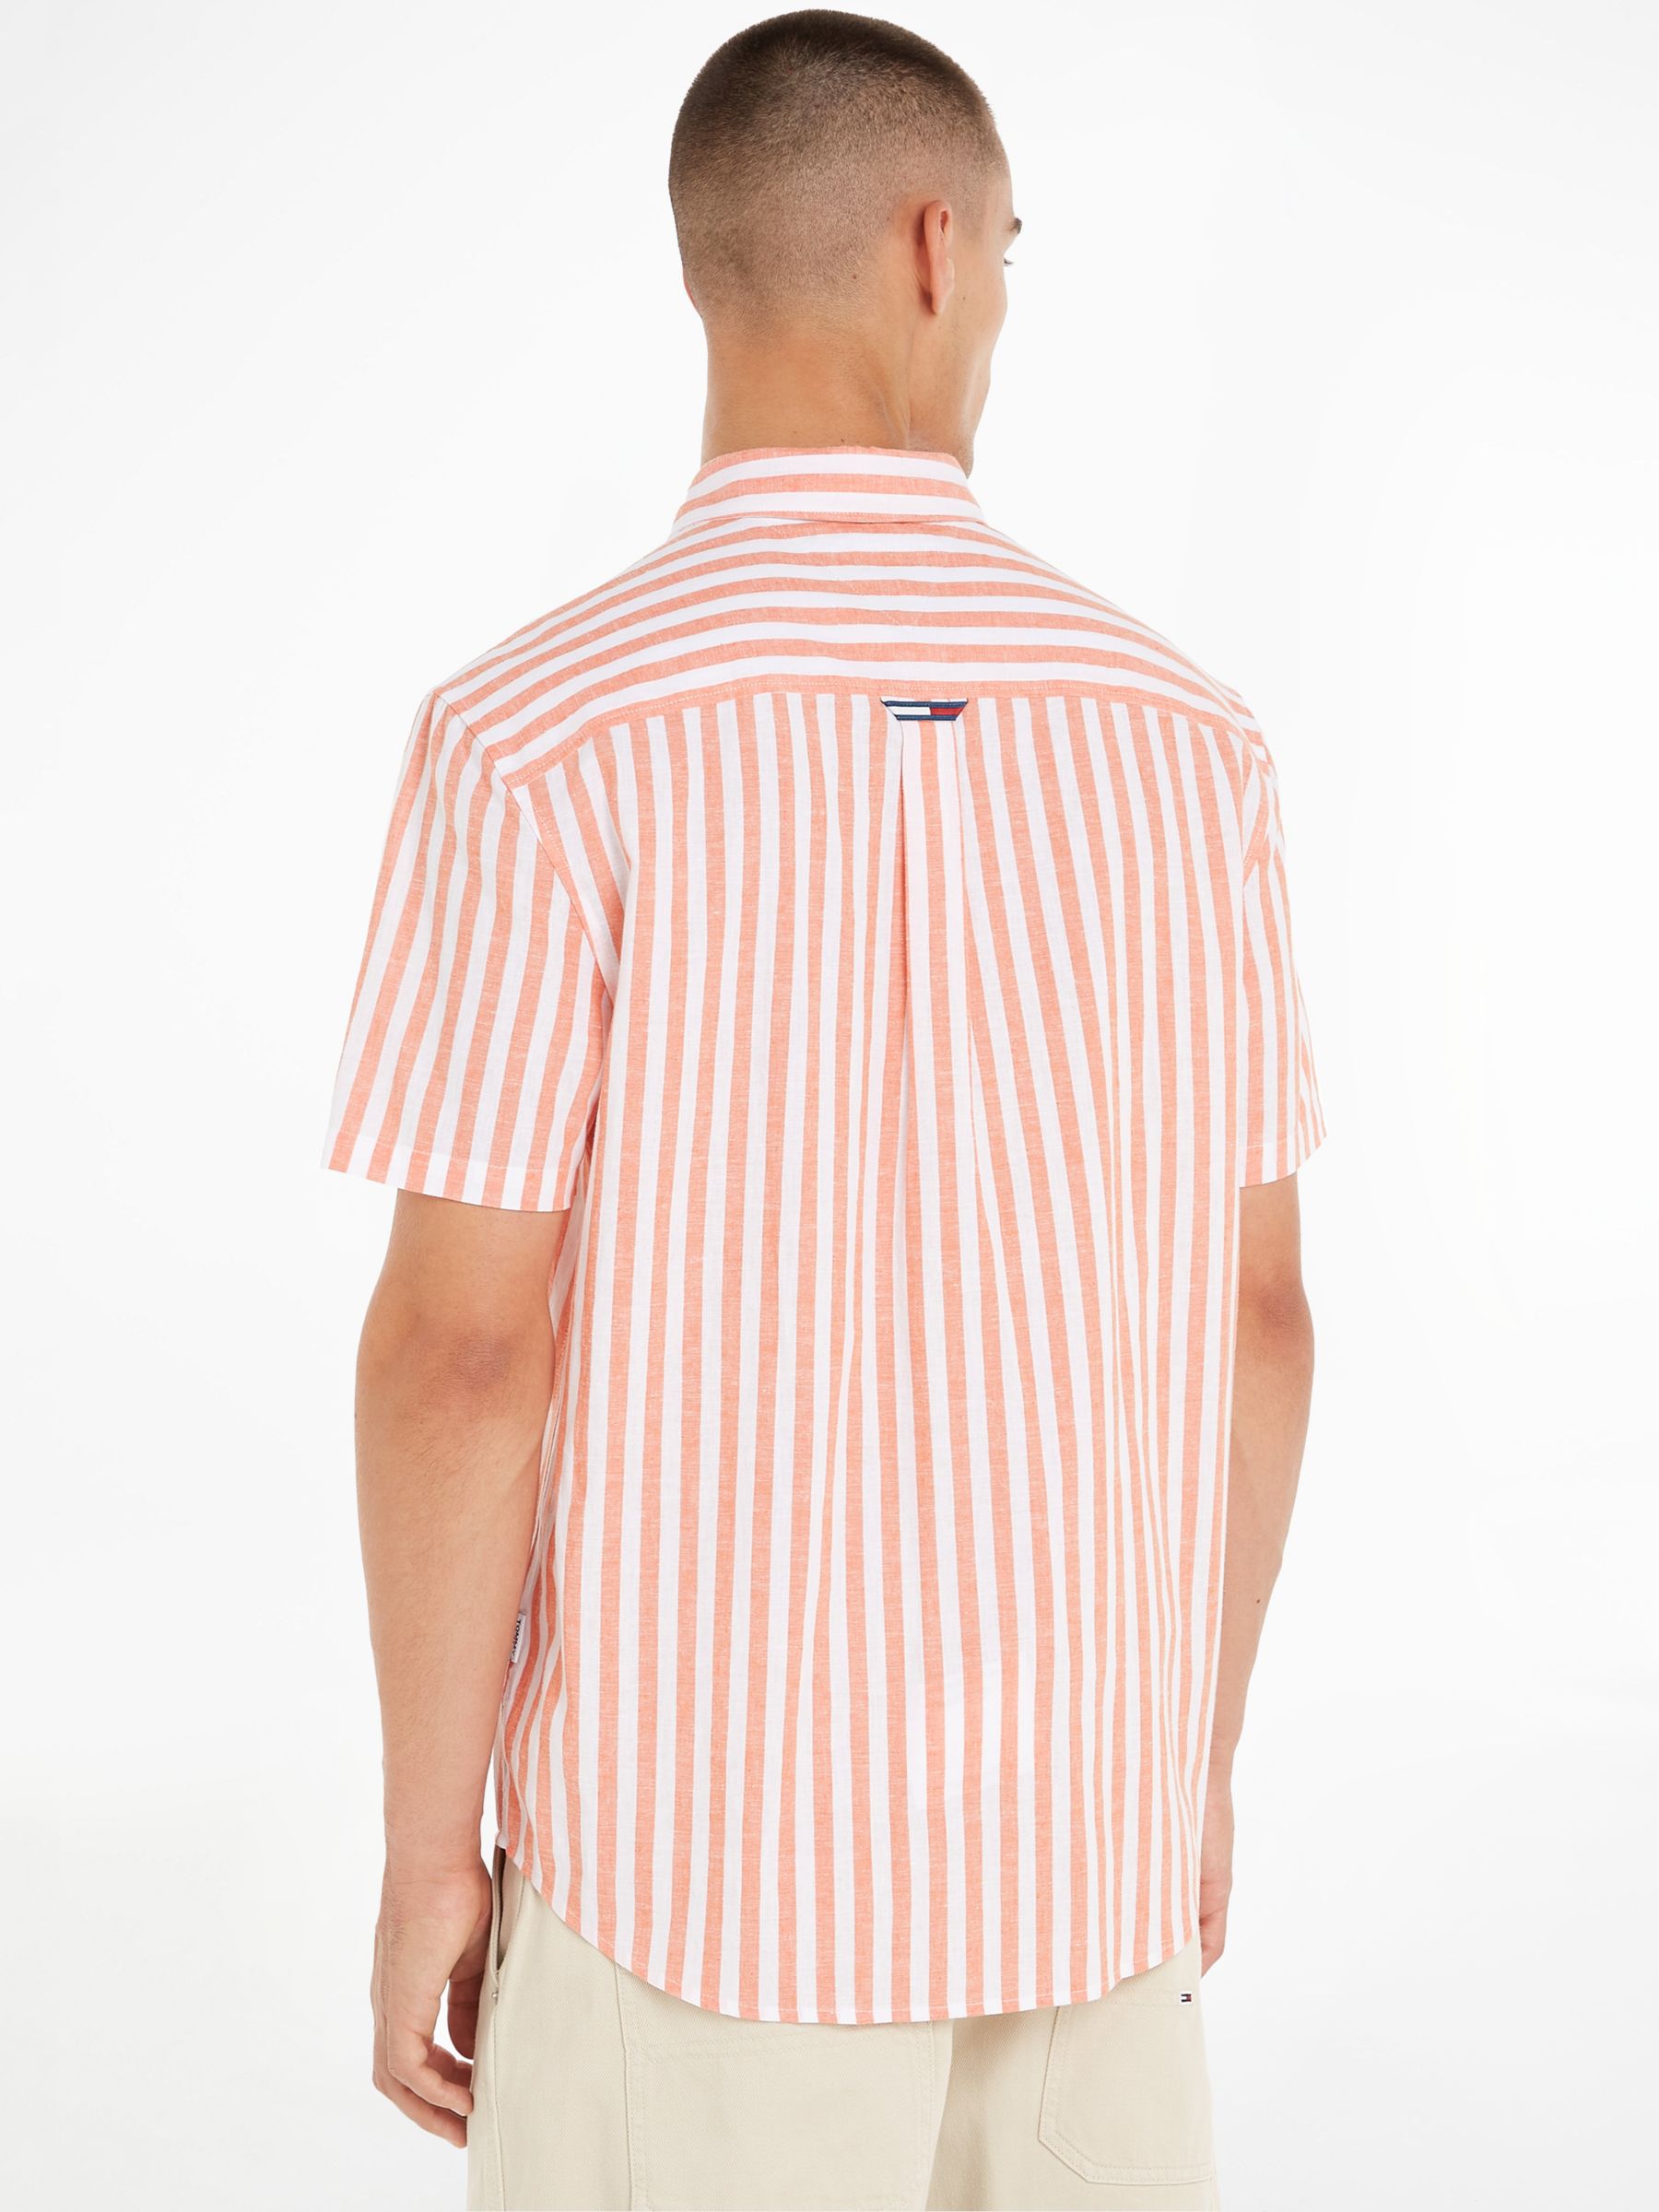 Tommy Hilfiger Relaxed Stripe Shirt, Citrus Orange Stripe, XS